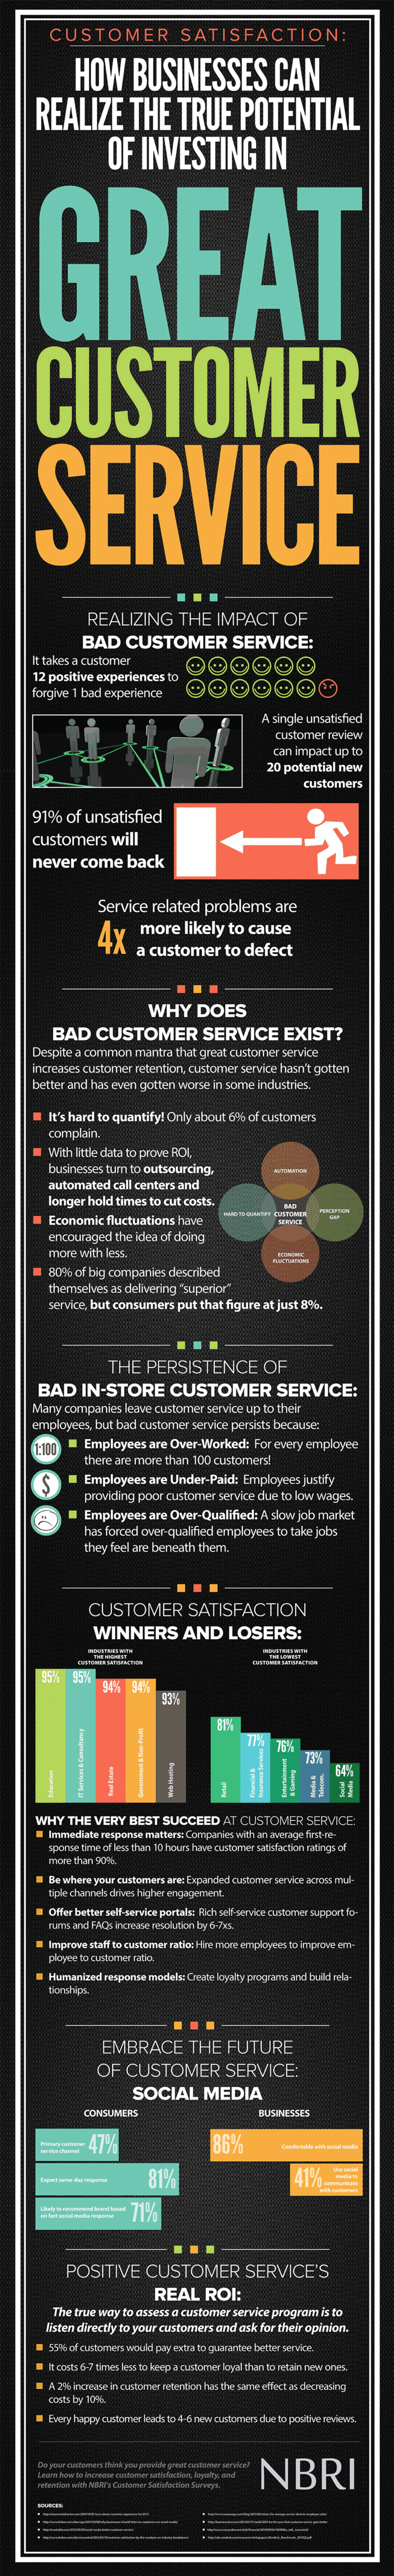 Customer Service Satisfaction infographic